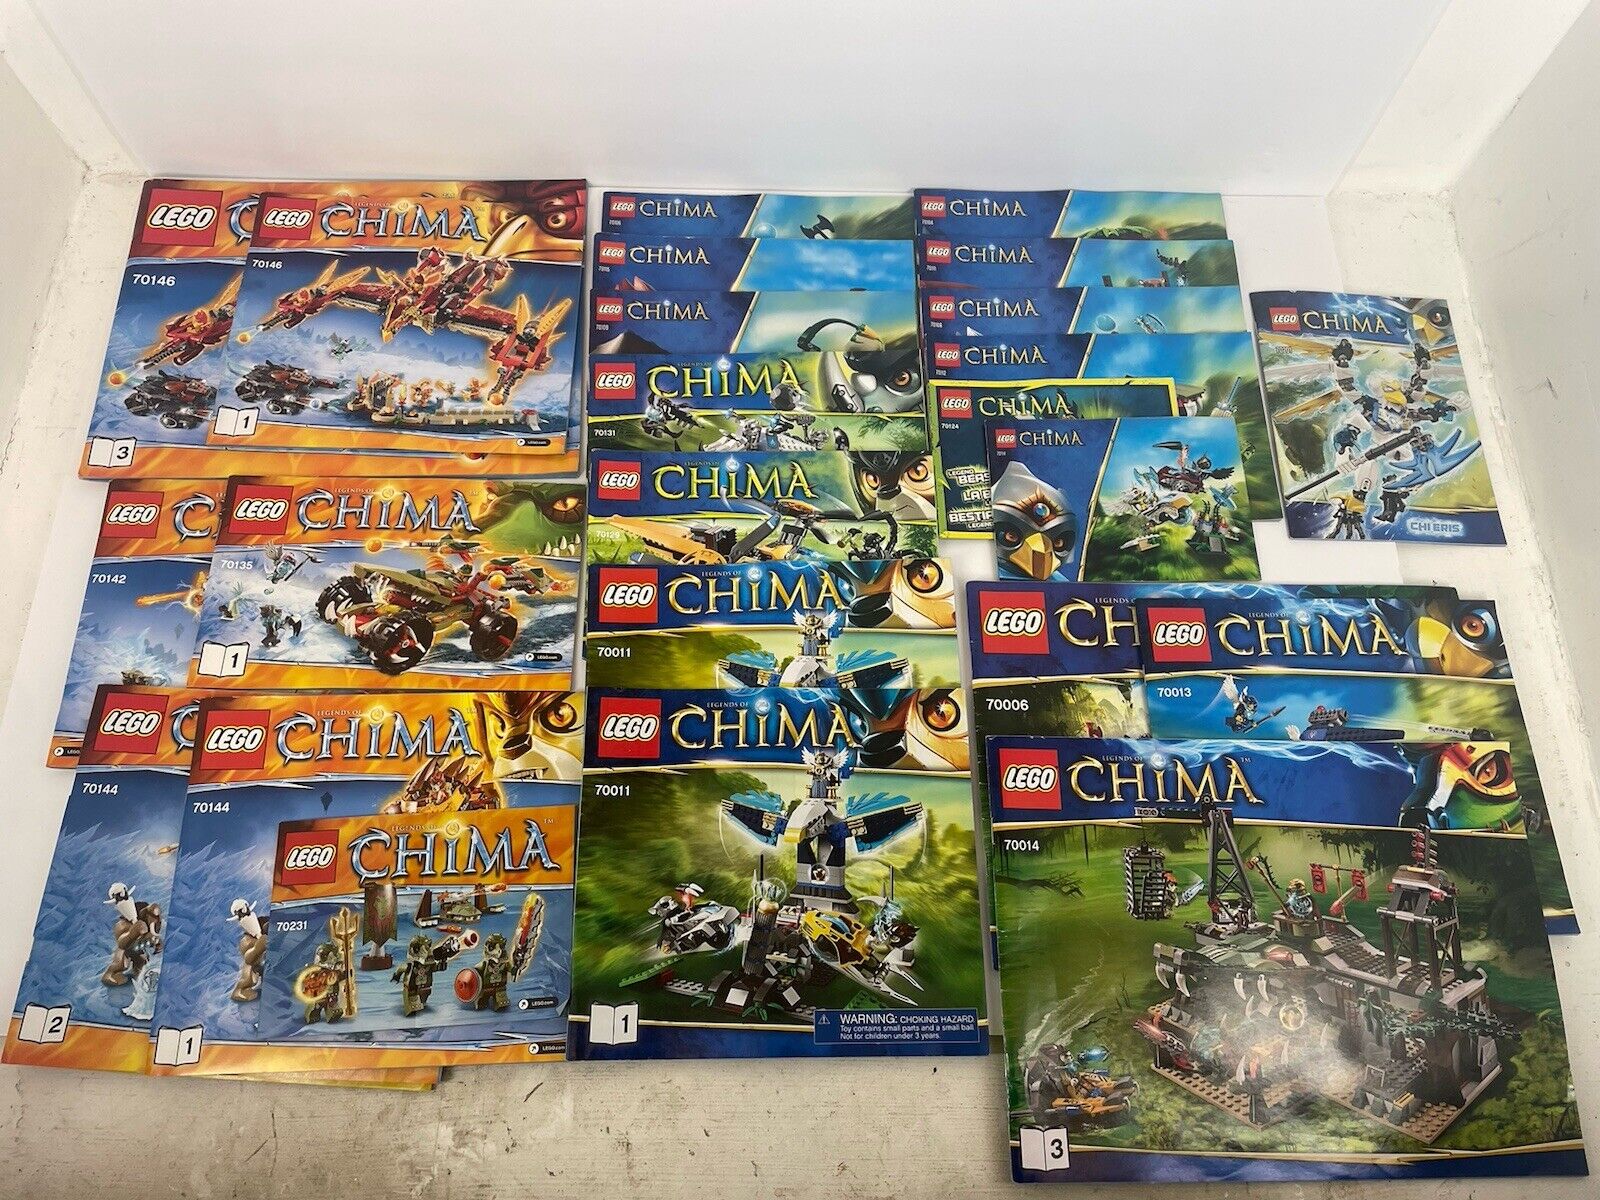 Lego Chima Instruction Random Manuals Lot of 24 Books Booklets